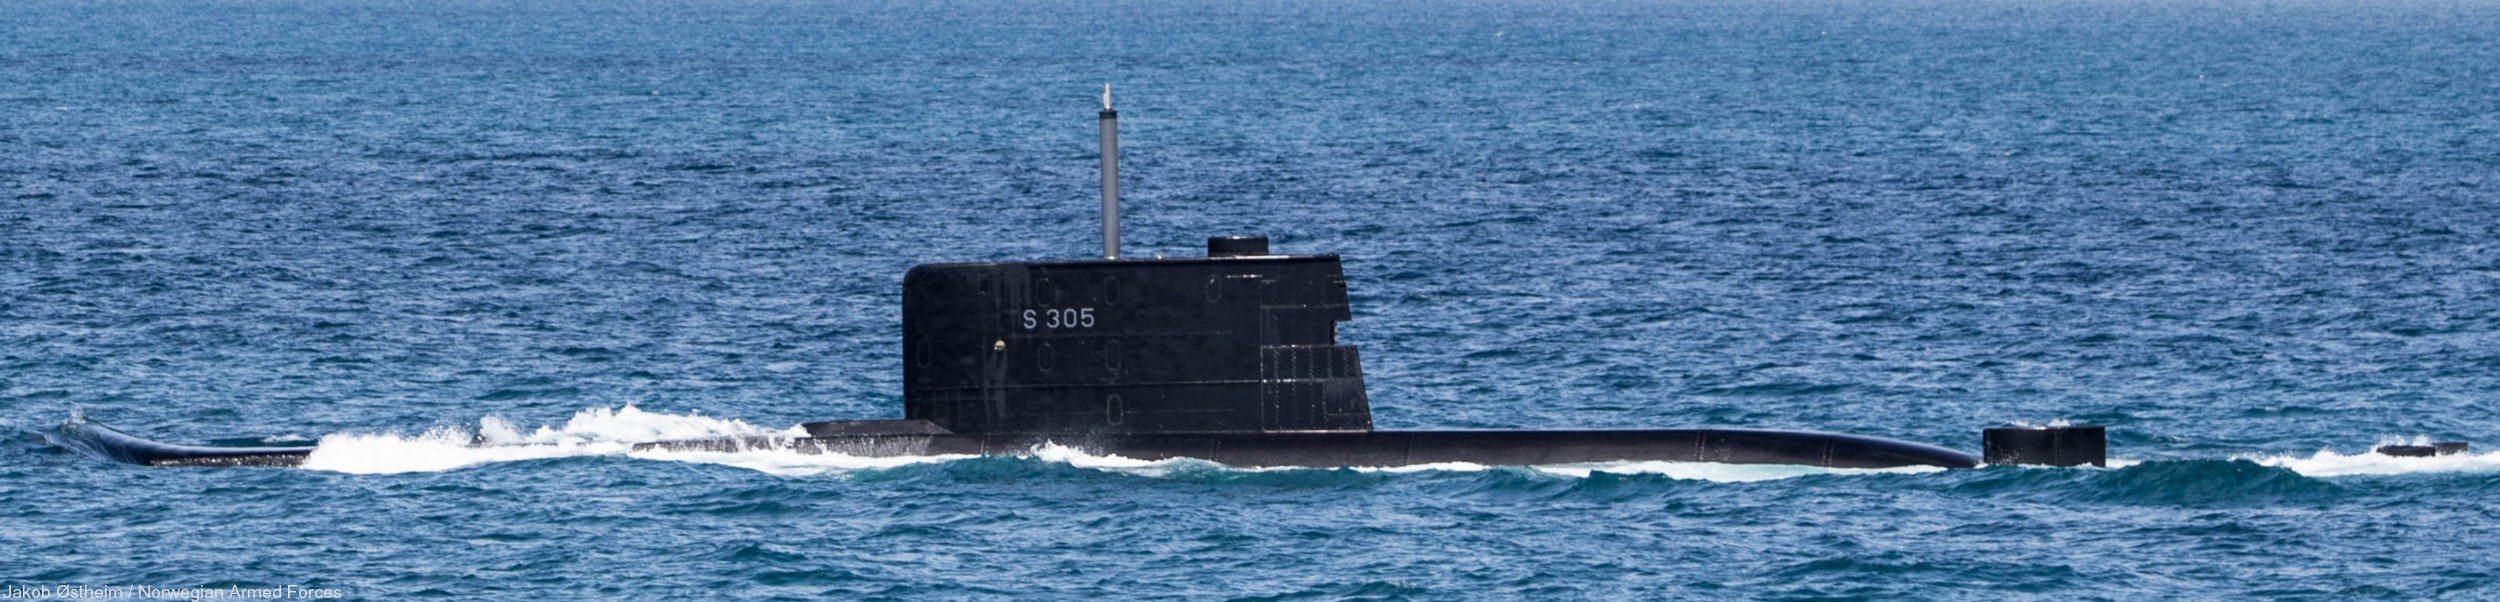 s-305 hnoms knm uredd ula class submarine type 210 attack ssk undervannsbåt royal norwegian navy sjøforsvaret 10